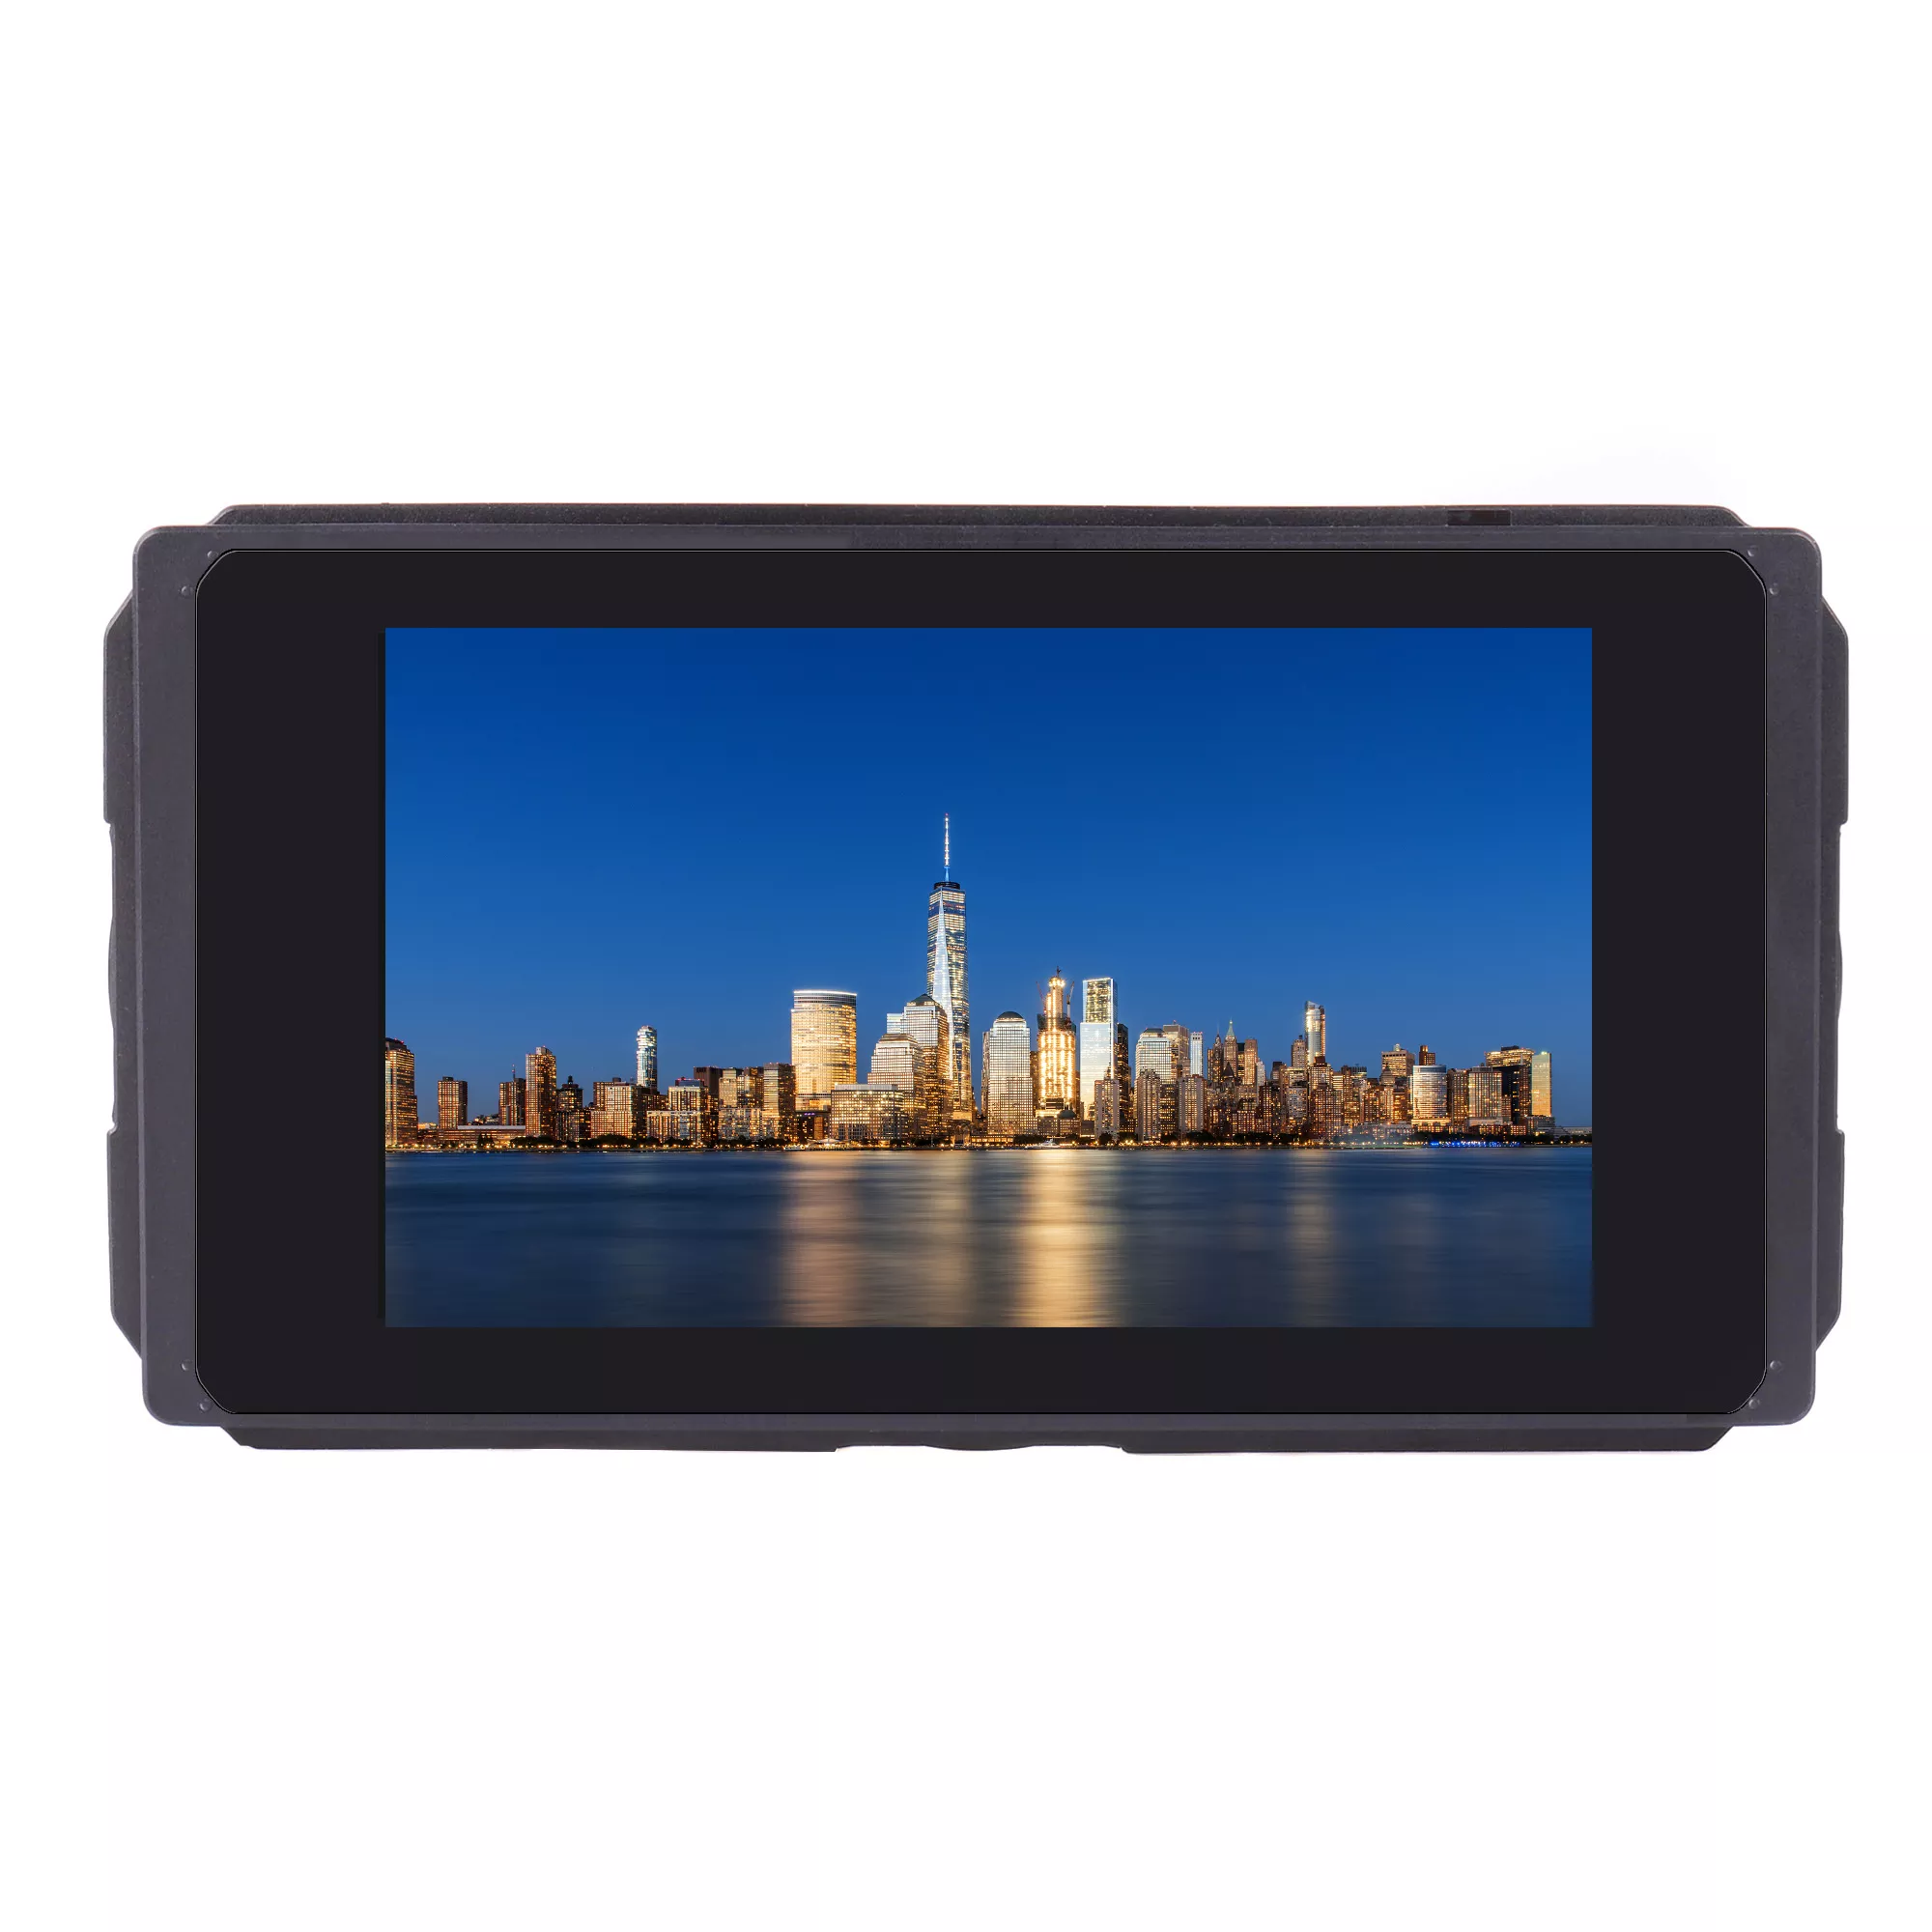 Fotga C50 4K On-Camera Field Monitor 5 Zoll 2000nits IPS Touchscreen mit USB HDMI 3D LUT Upgrade für DSLR Camcorder